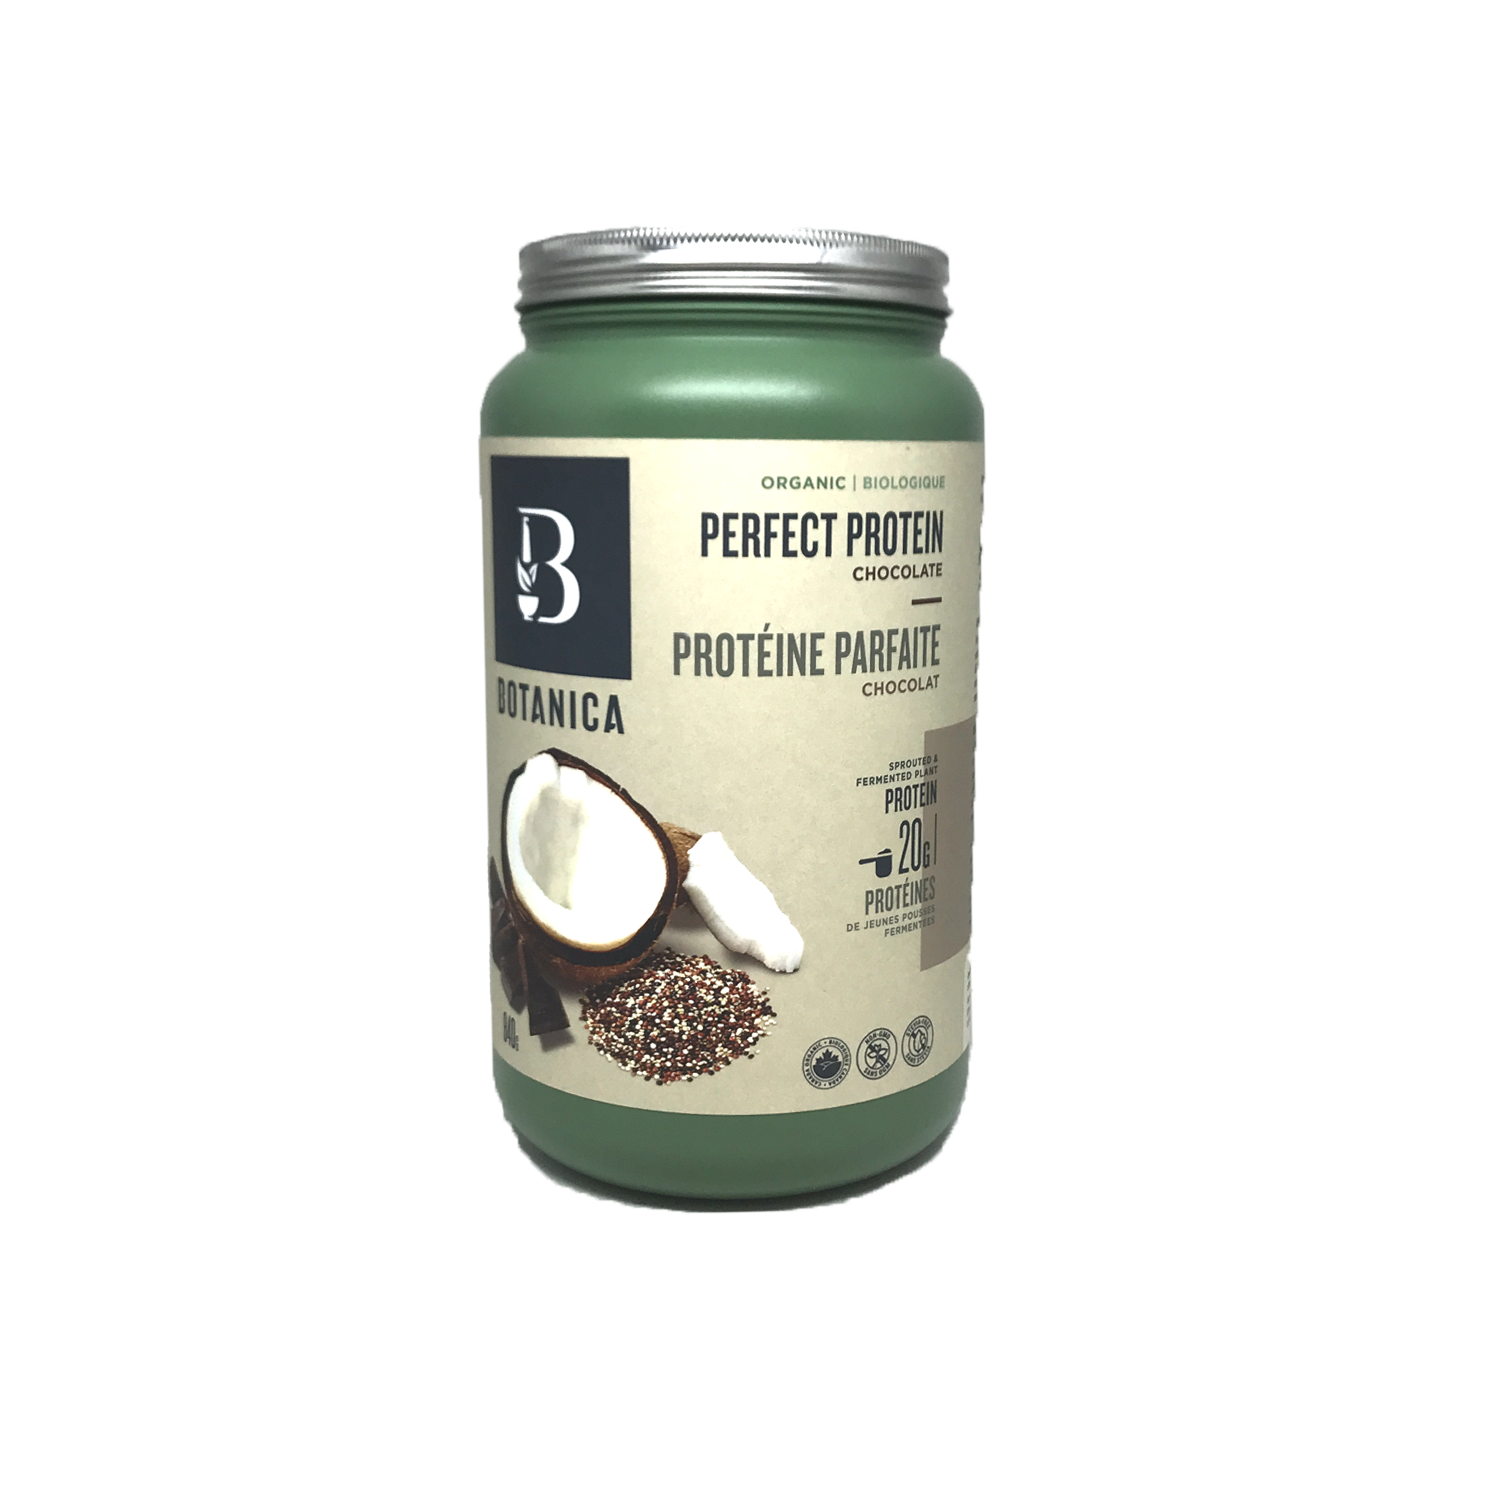 Botanica Organic Perfect Protein Chocolate 840g